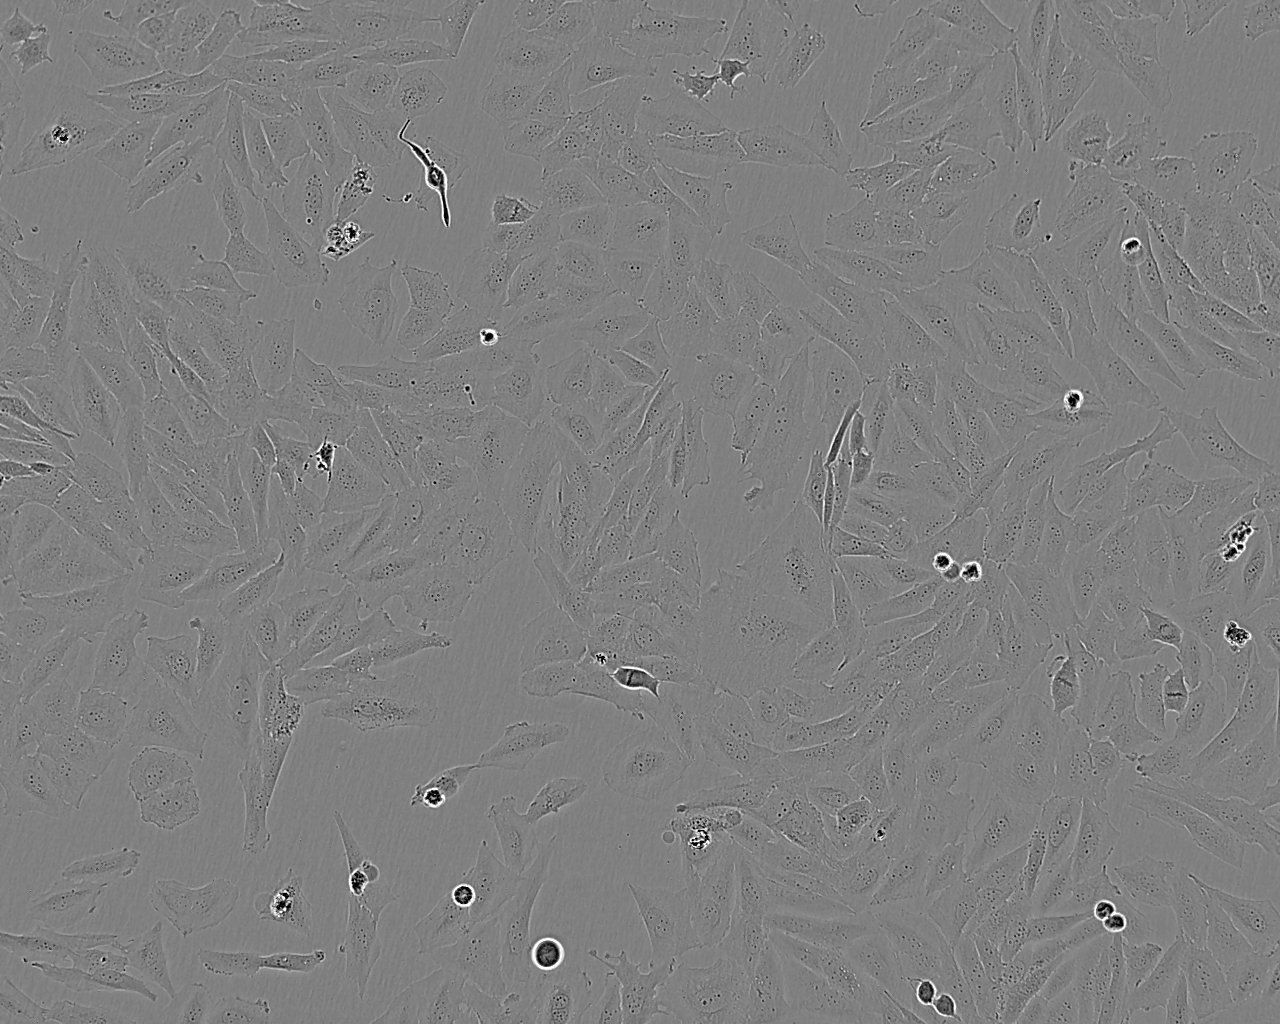 MLO-Y4 小鼠骨样细胞系